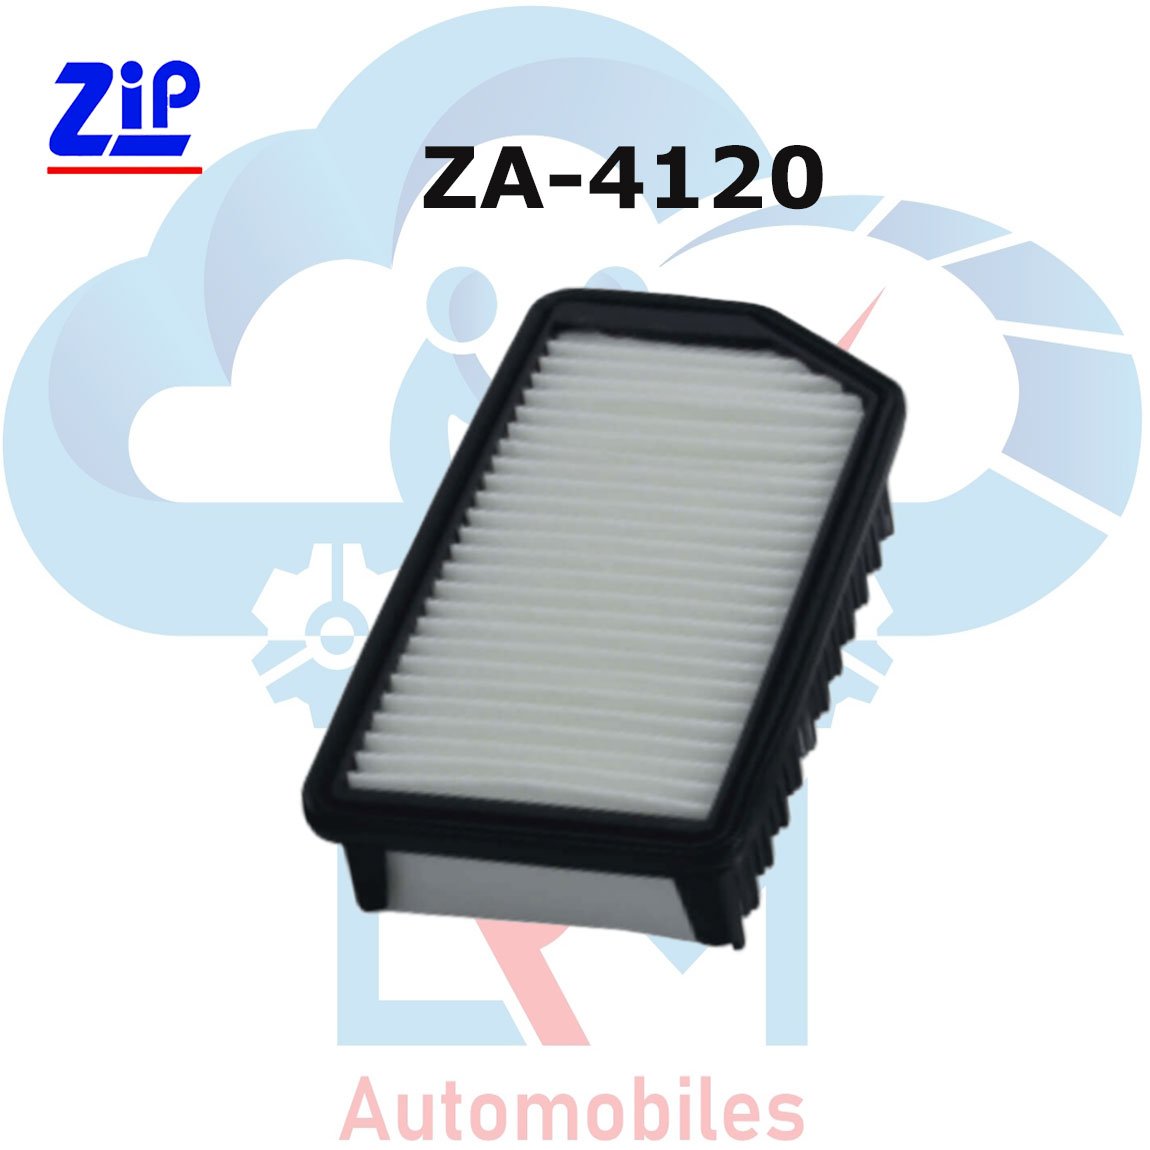 Elantra Fluidic Air filter in zip filter